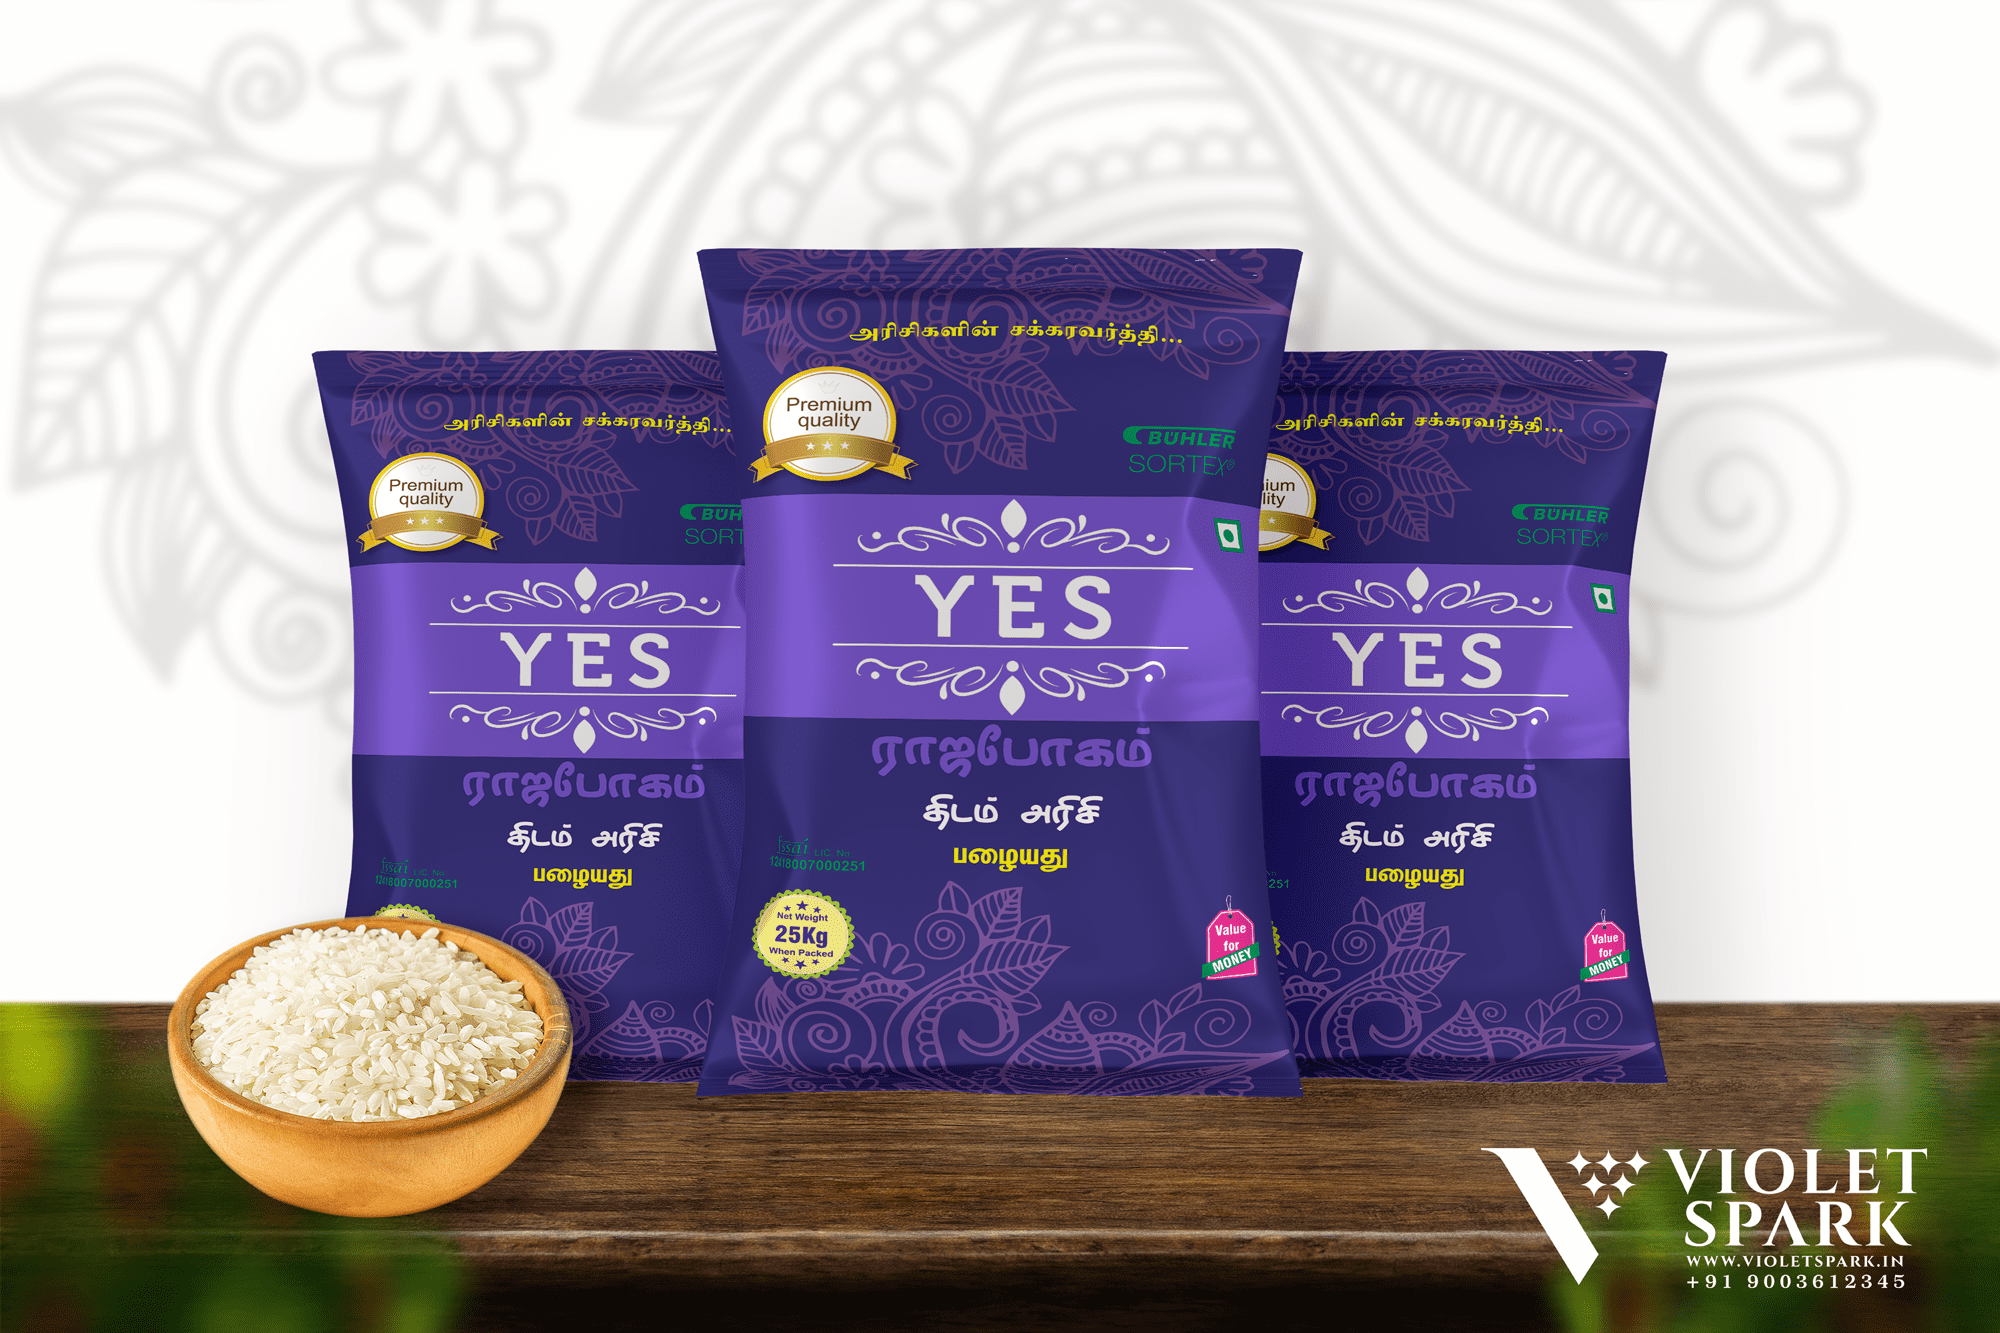 Yes Brand Rajabhogam Rice Branding & Packaging Design in Salem by Violet Spark